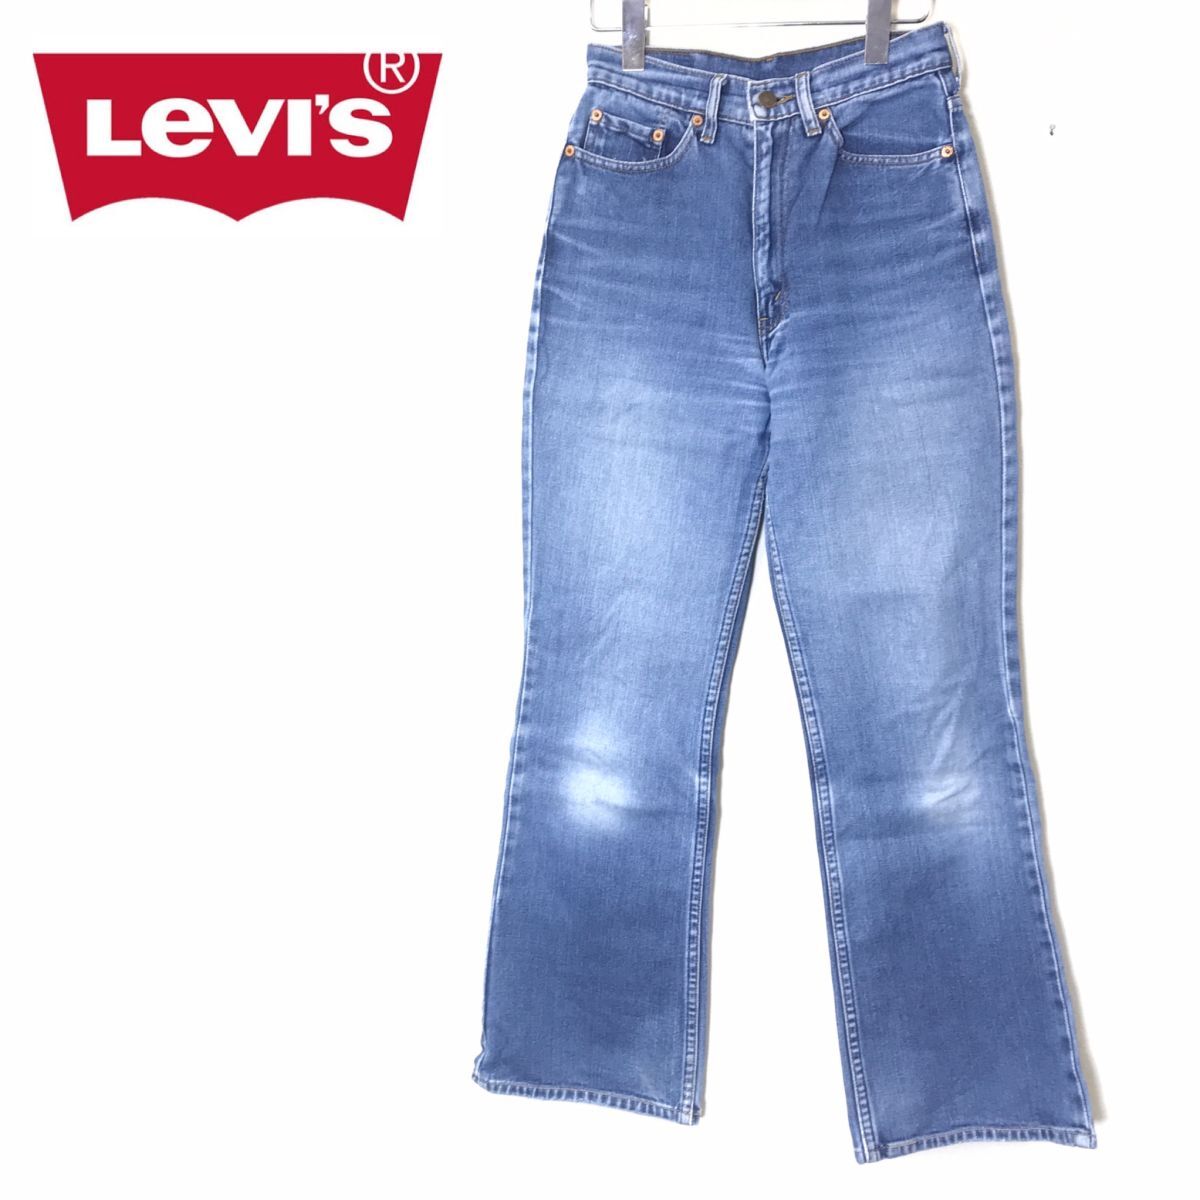 M884-F* Levis Levi's 517 Denim брюки джинсы ботинки cut flair низ * W29 L30 хлопок 100 индиго б/у одежда 